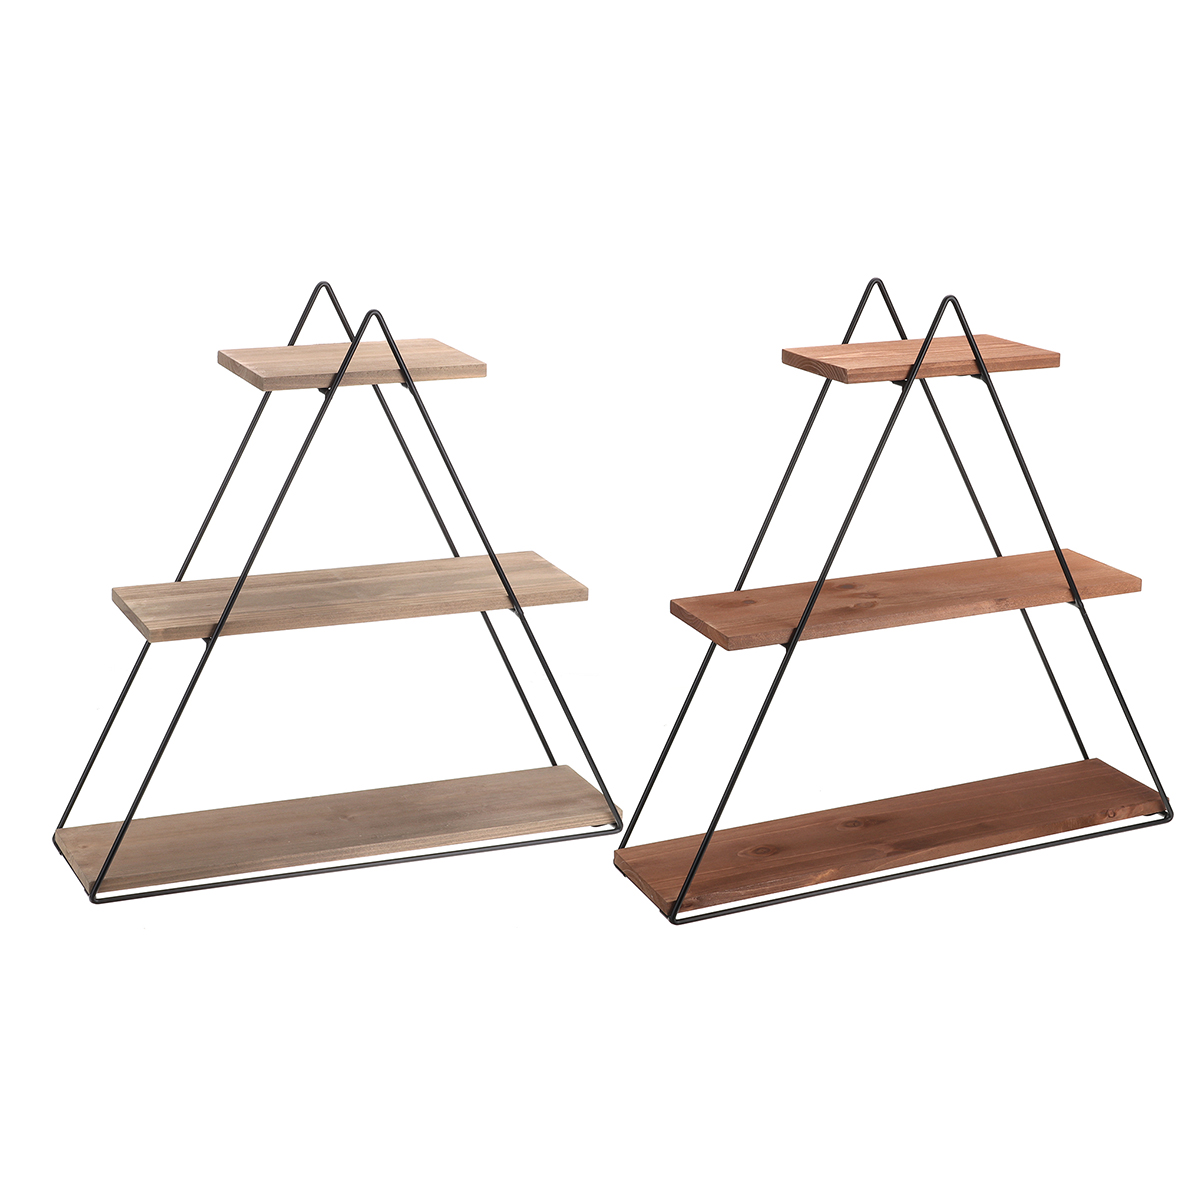 3-Tier-Triangular-Wall-Mounted-Shelf-Floating-Shelves-Metal-Display-Rack-Home-Hanging-Stand-Decor-Fo-1791083-11